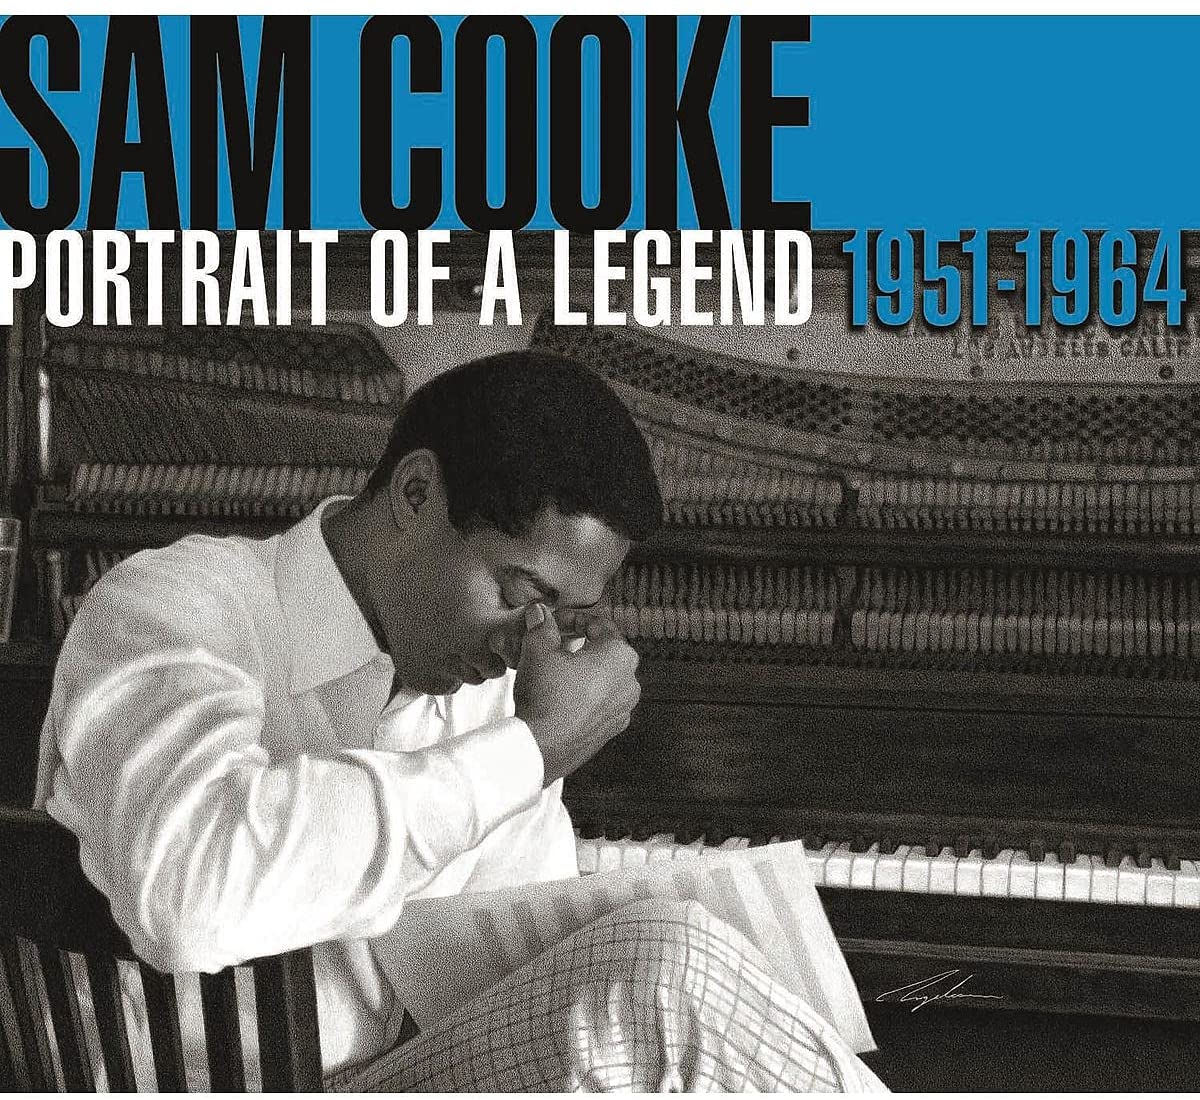 Sam Cooke Portrait of A Legend